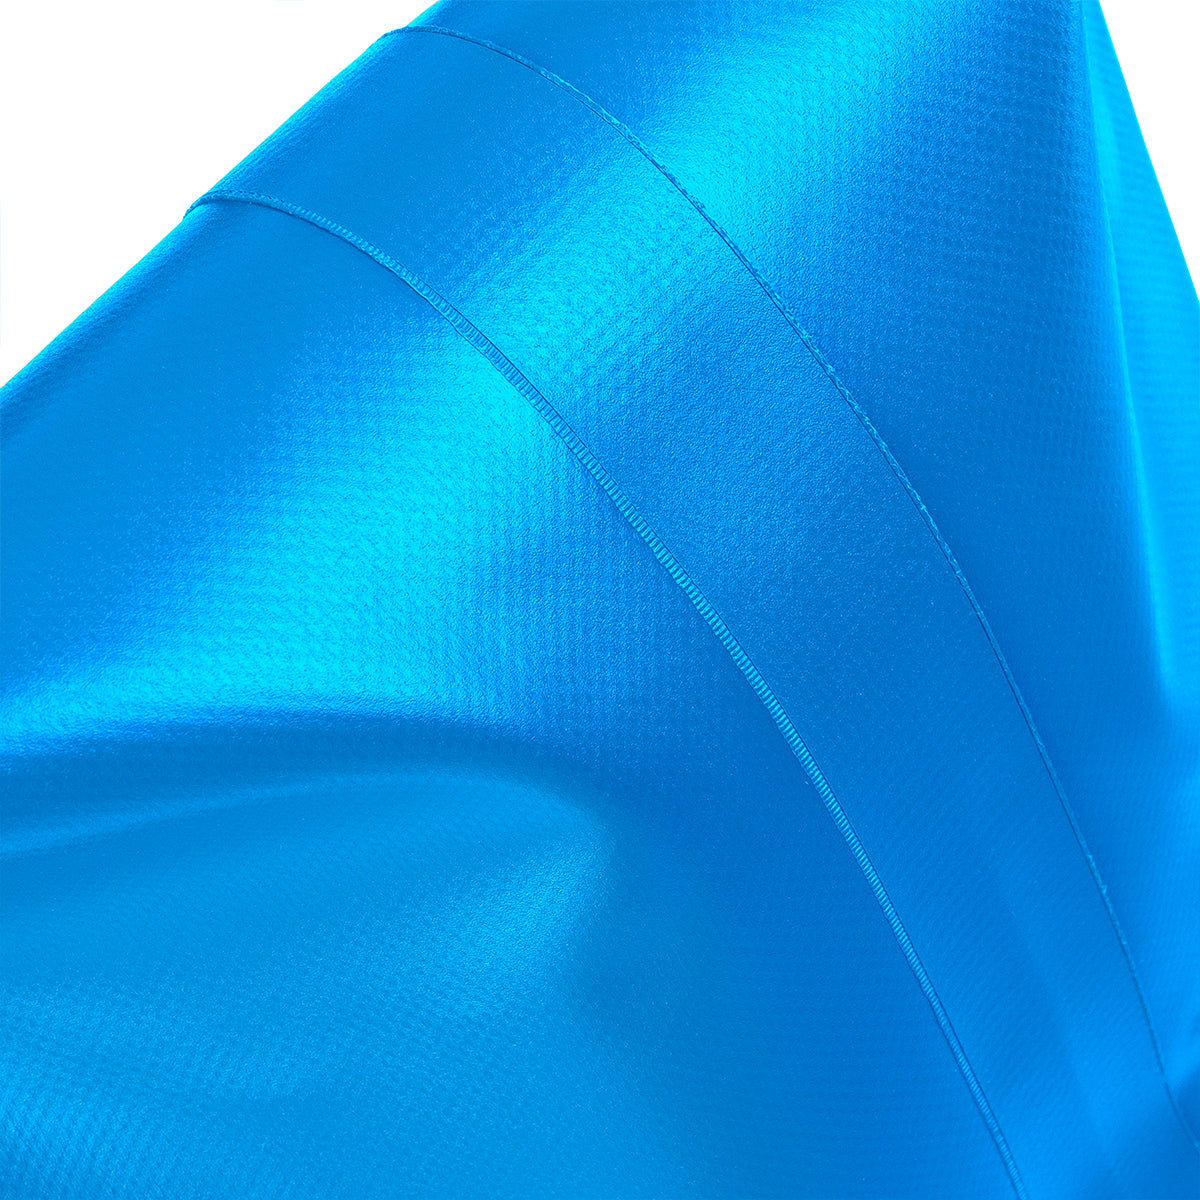 Nisus 120 L Blue Waterproof Dry Bag PVC Fabric